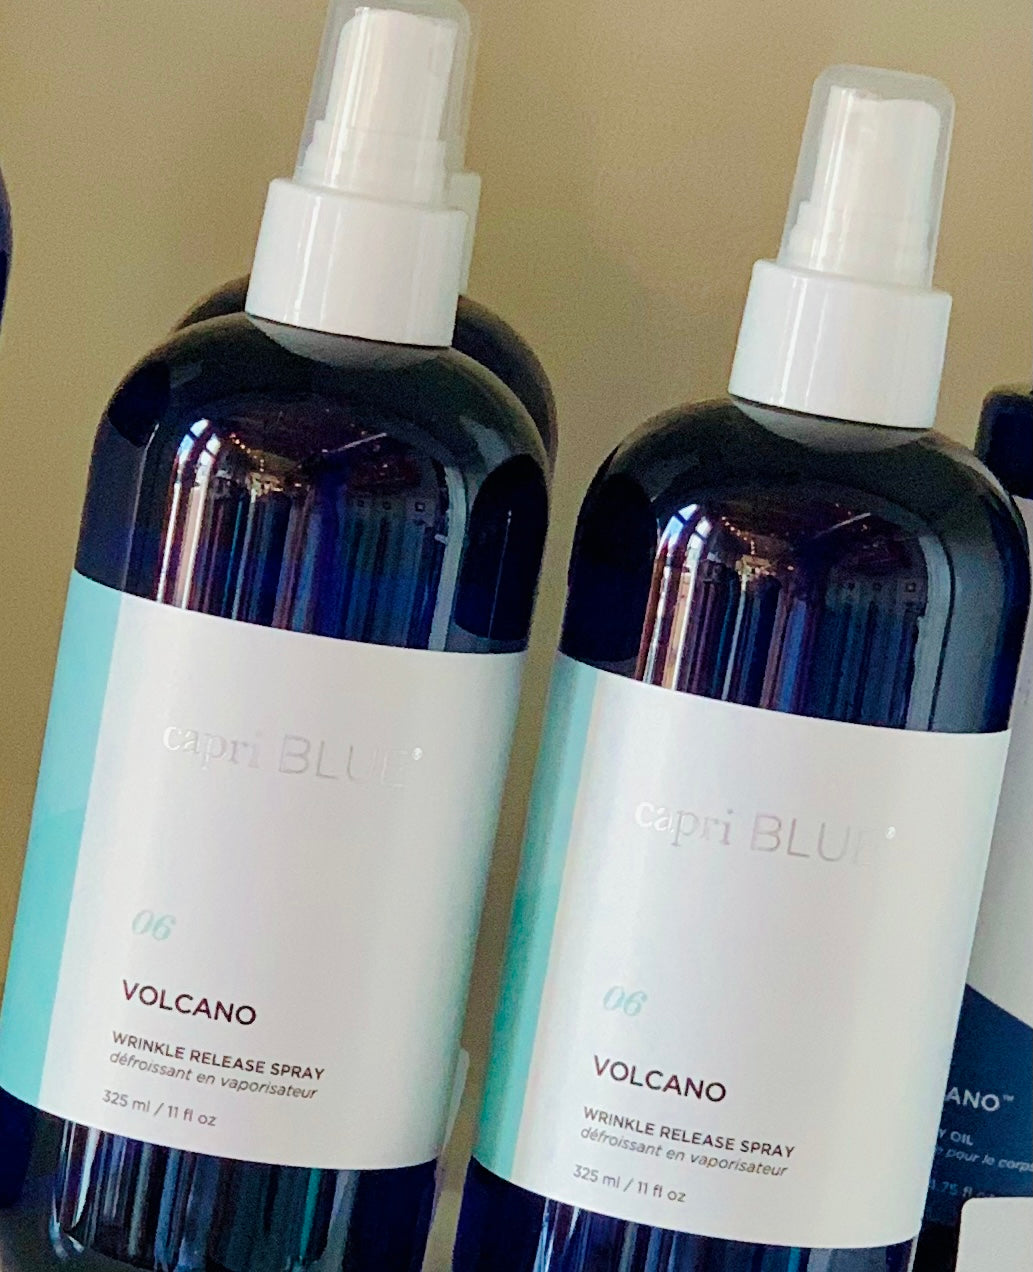 Capri Blue - Wrinkle Release Spray - VOLCANO